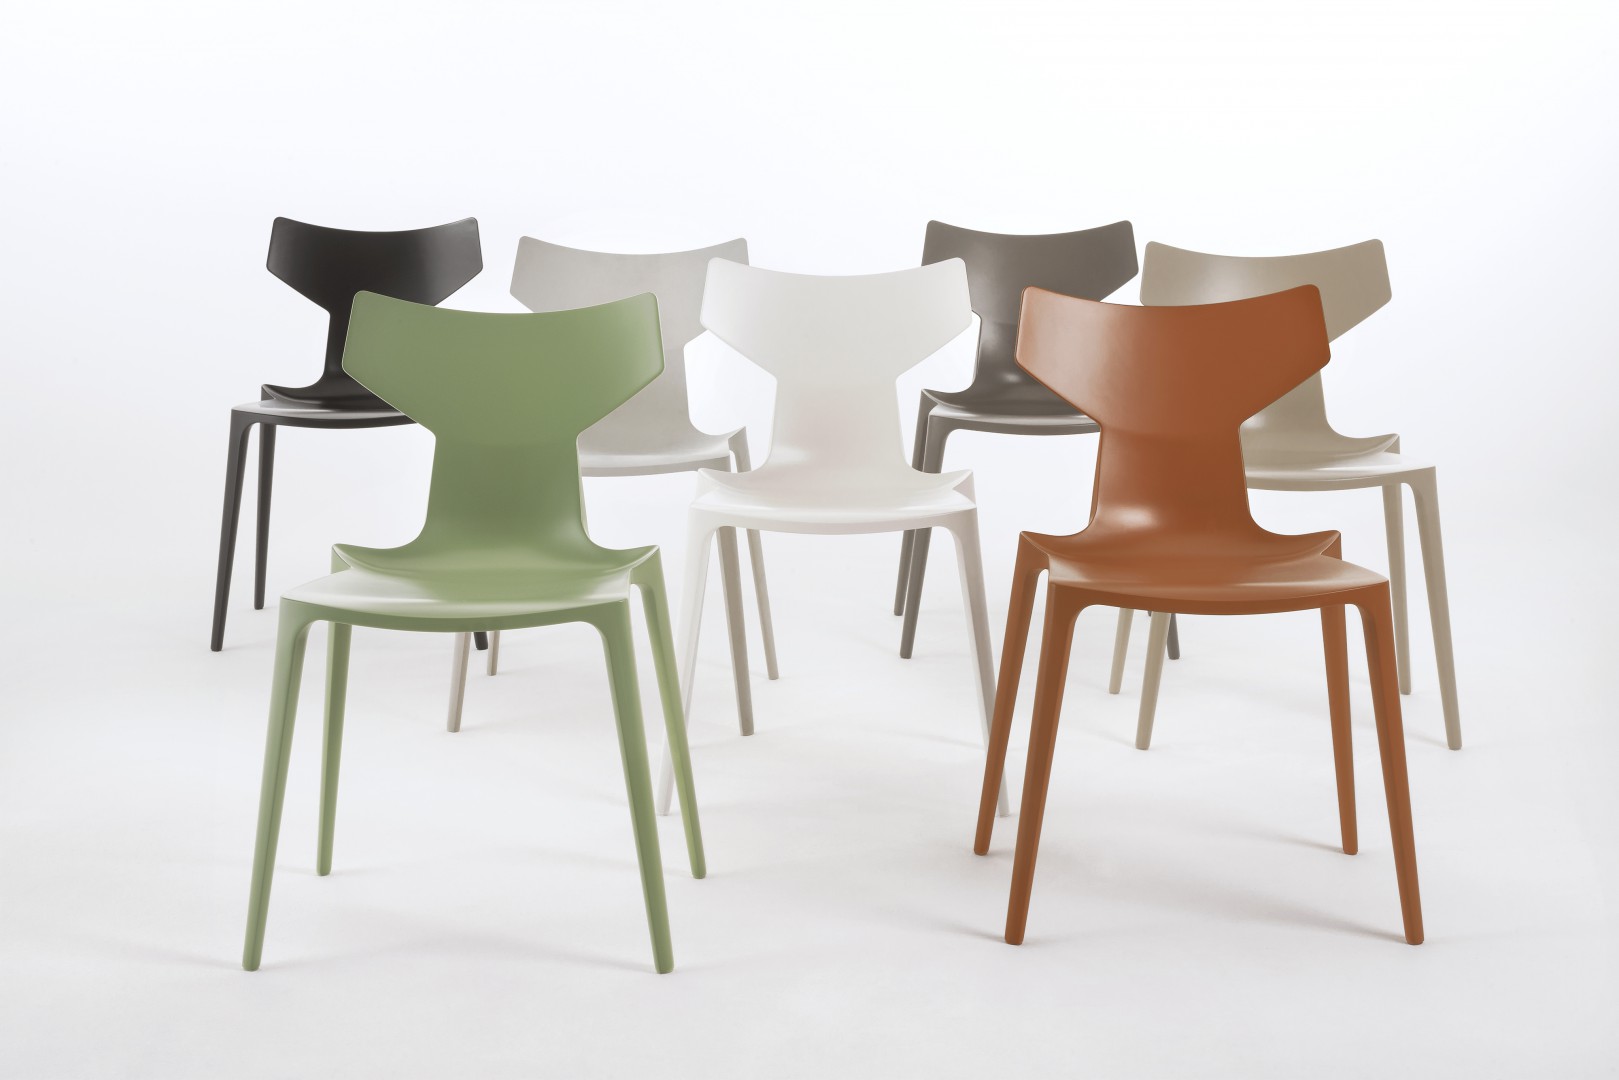 Krzesła "Organic" z oferty firmy Kartell. Fot. Kartell